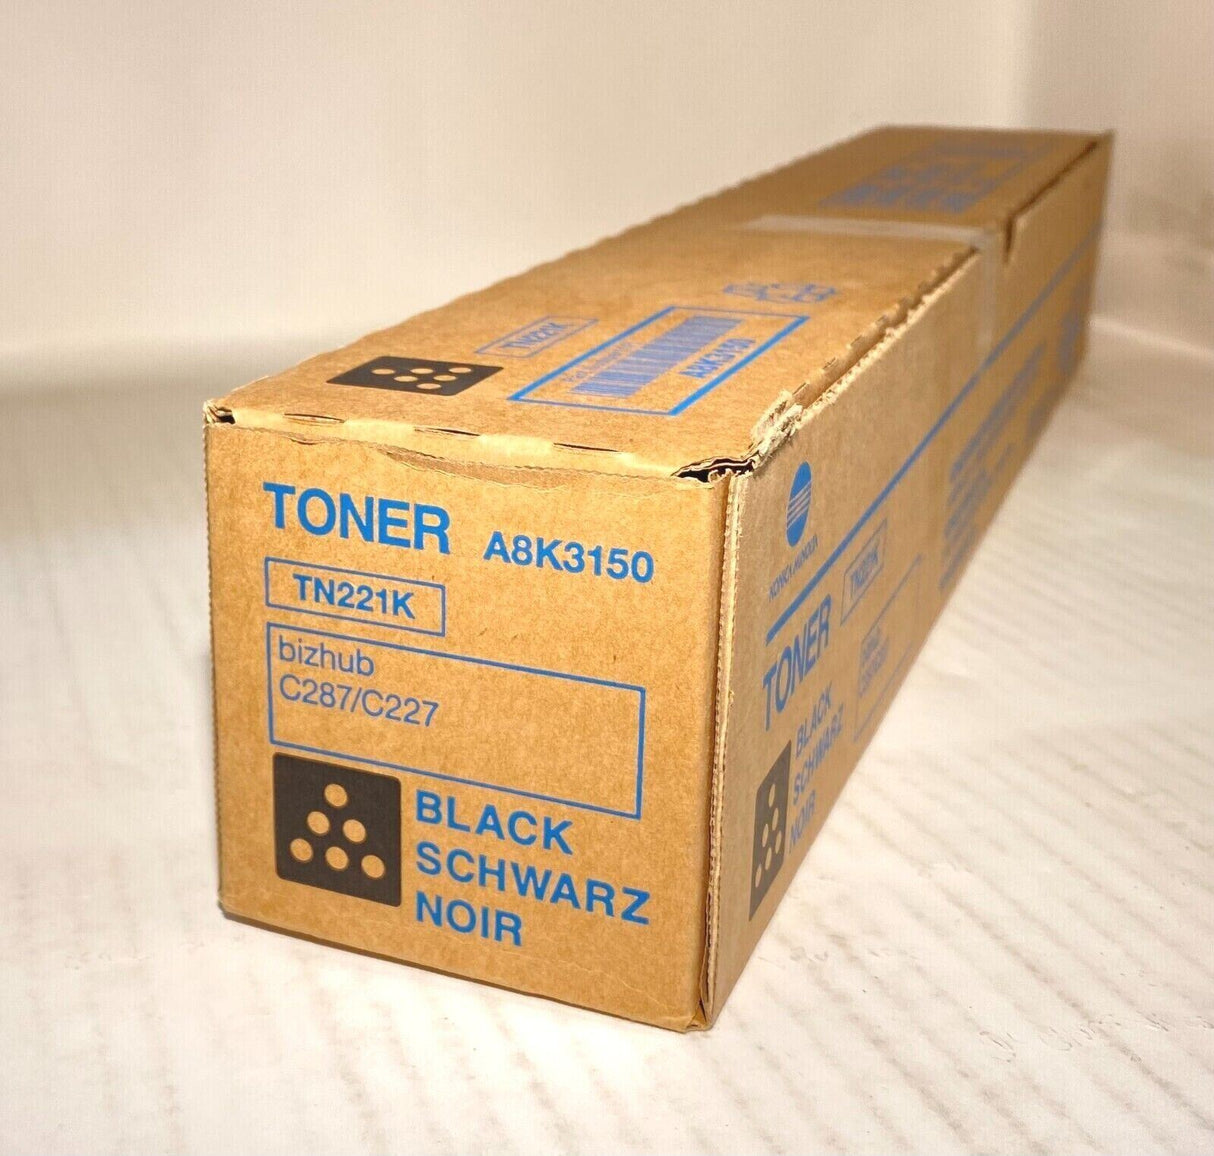 Original Konica Minolta TN221K Toner Black A8K3150 for Bizhub C287 C227 NEW OVP